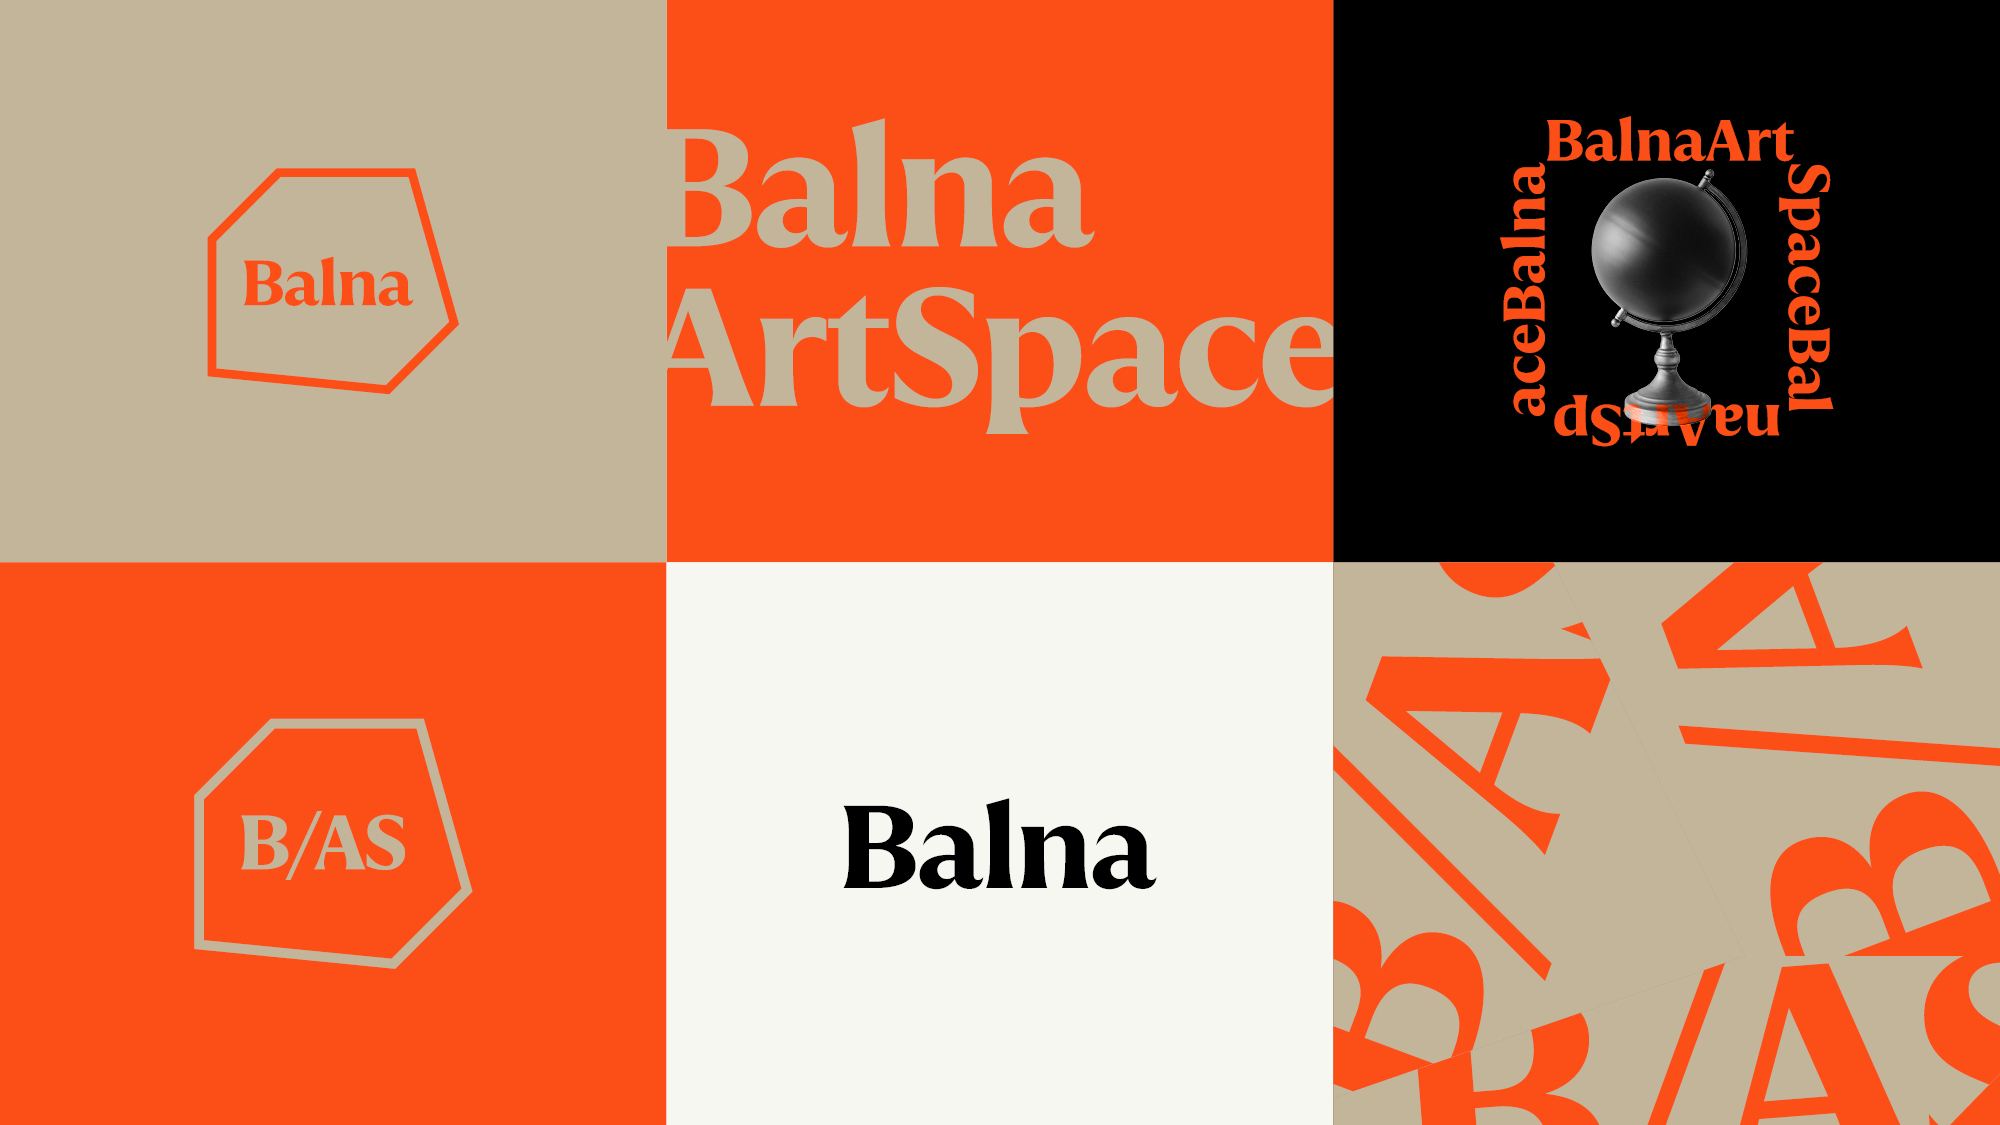 Branding-Balna-ArtSpace.-150Dpijpg4